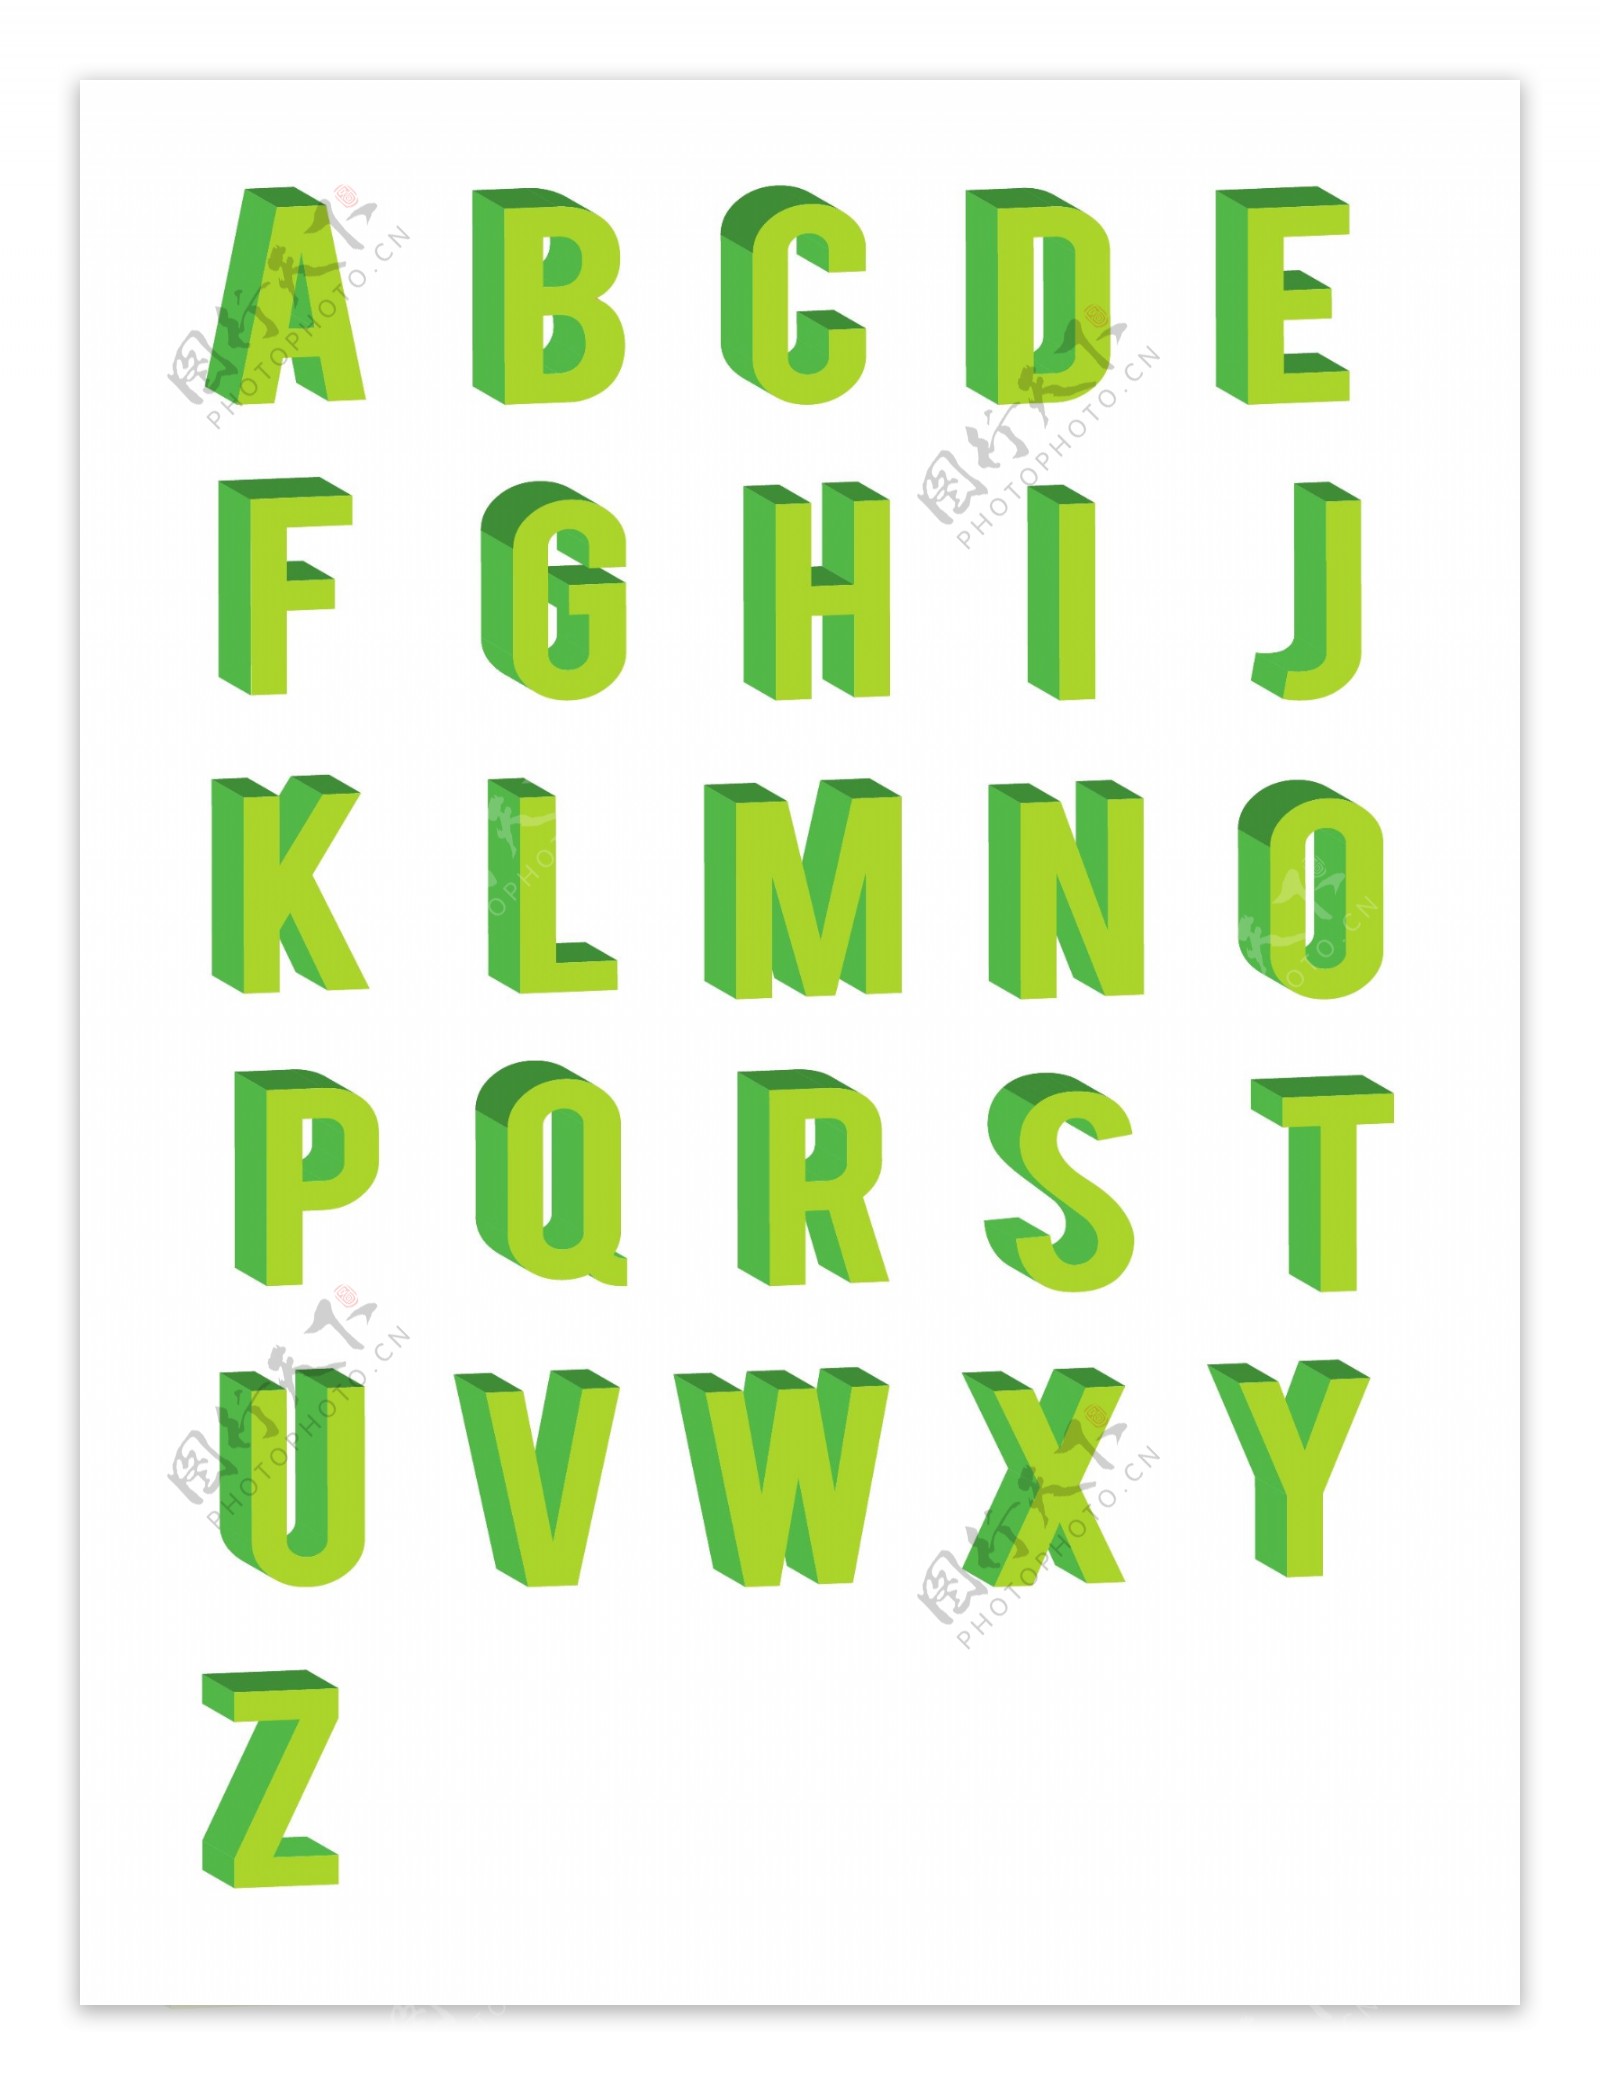 2.5D绿色26个英文字母矢量可商用